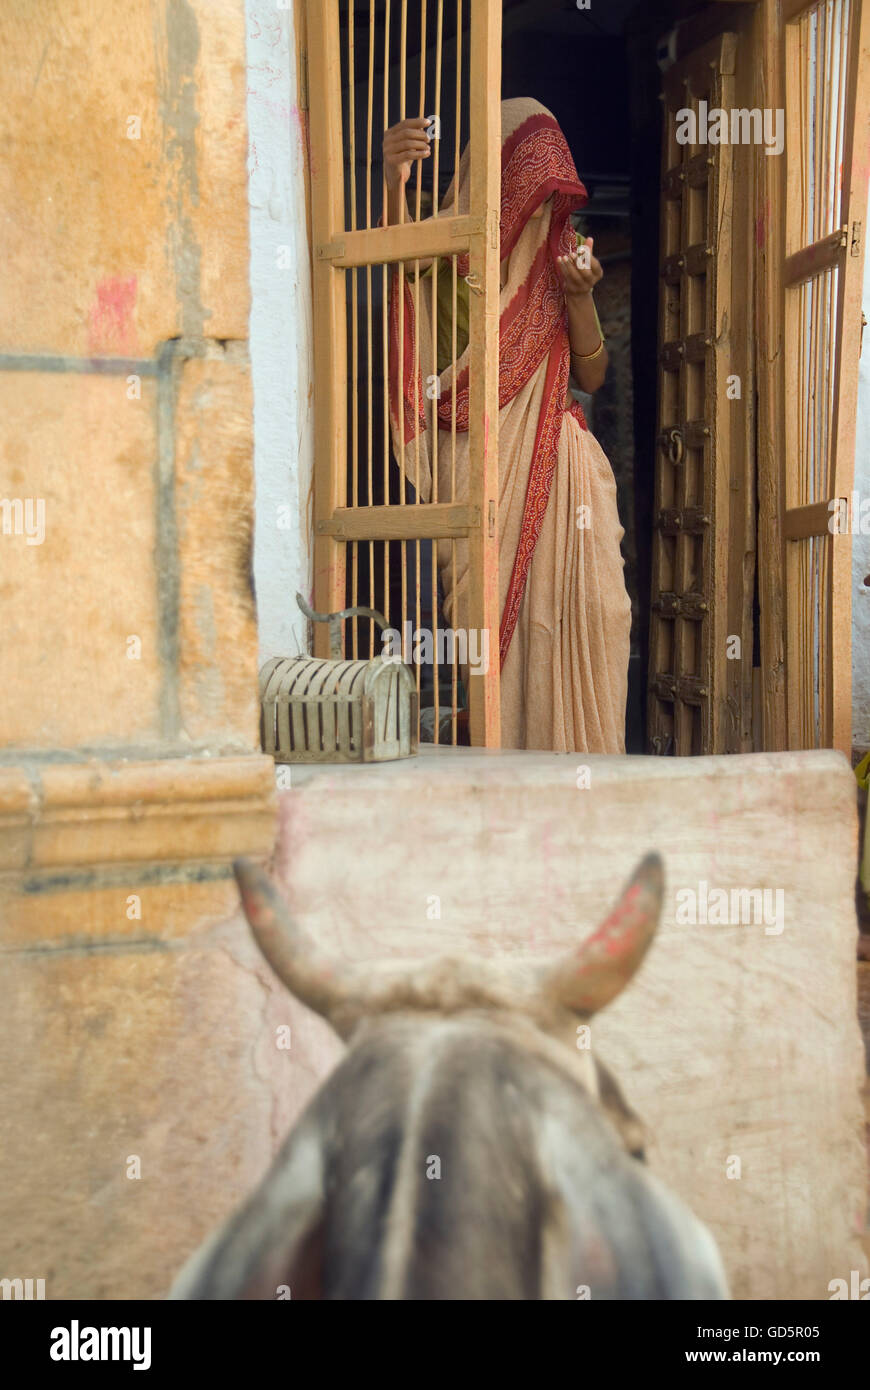 Woman standing next to a door Stock Photo